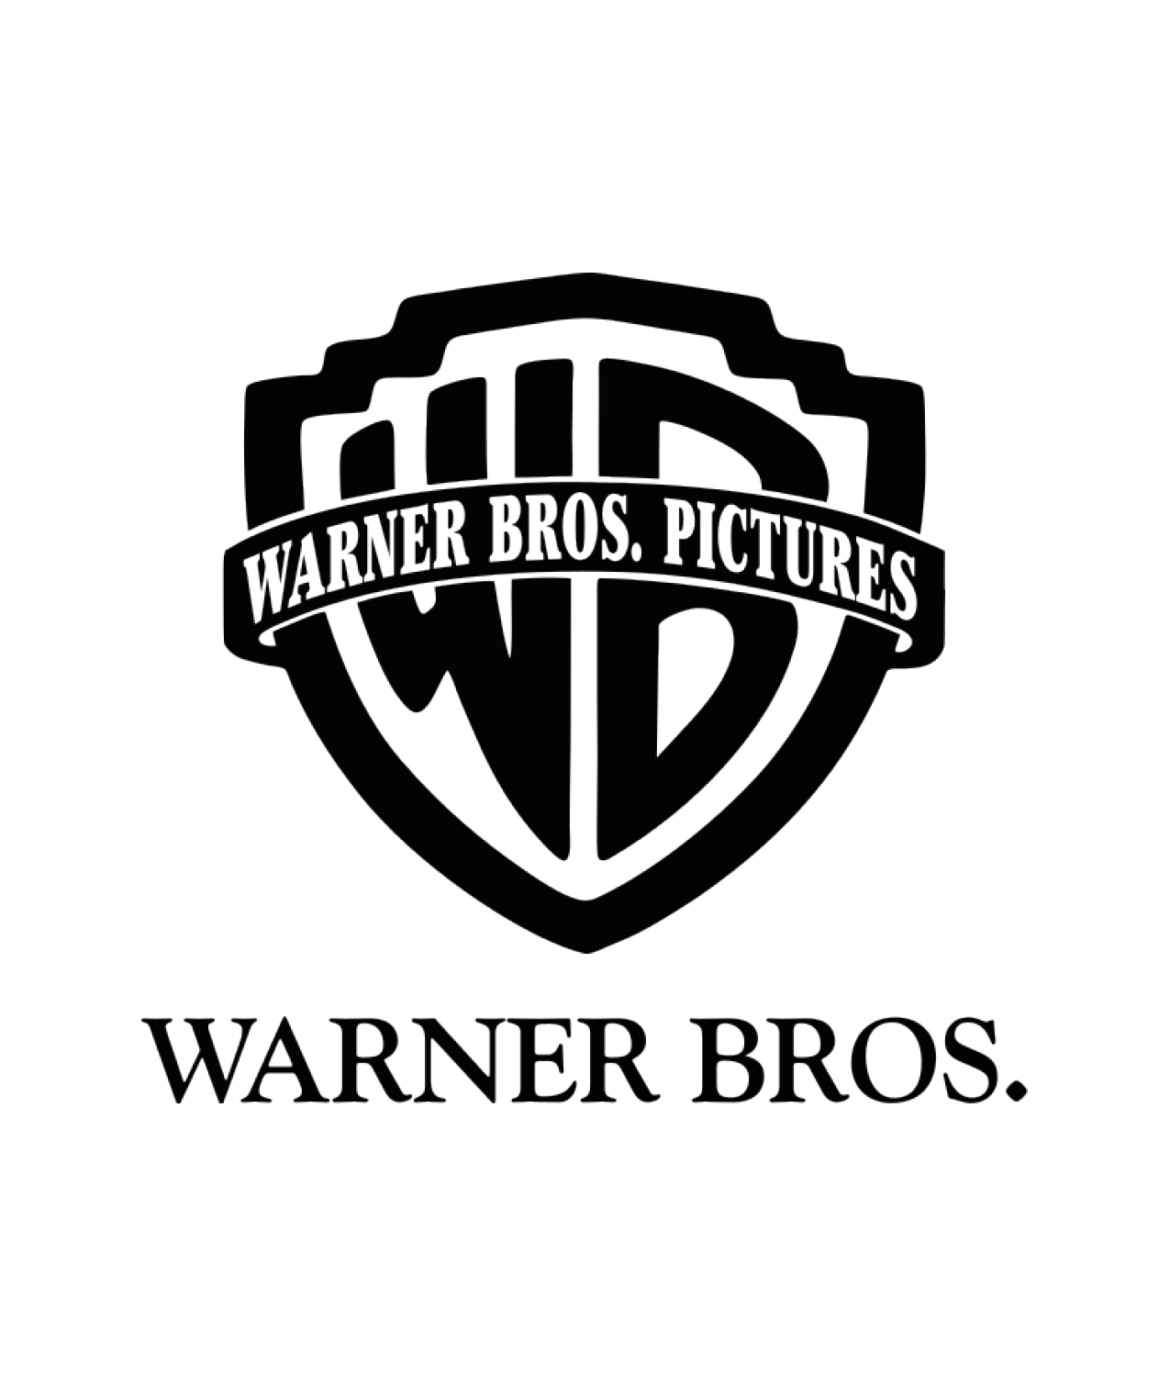 Варнер брос. WB логотип. Уорнер Бразер. Логотип Уорнер бразерс. Киностудия Warner Bros.